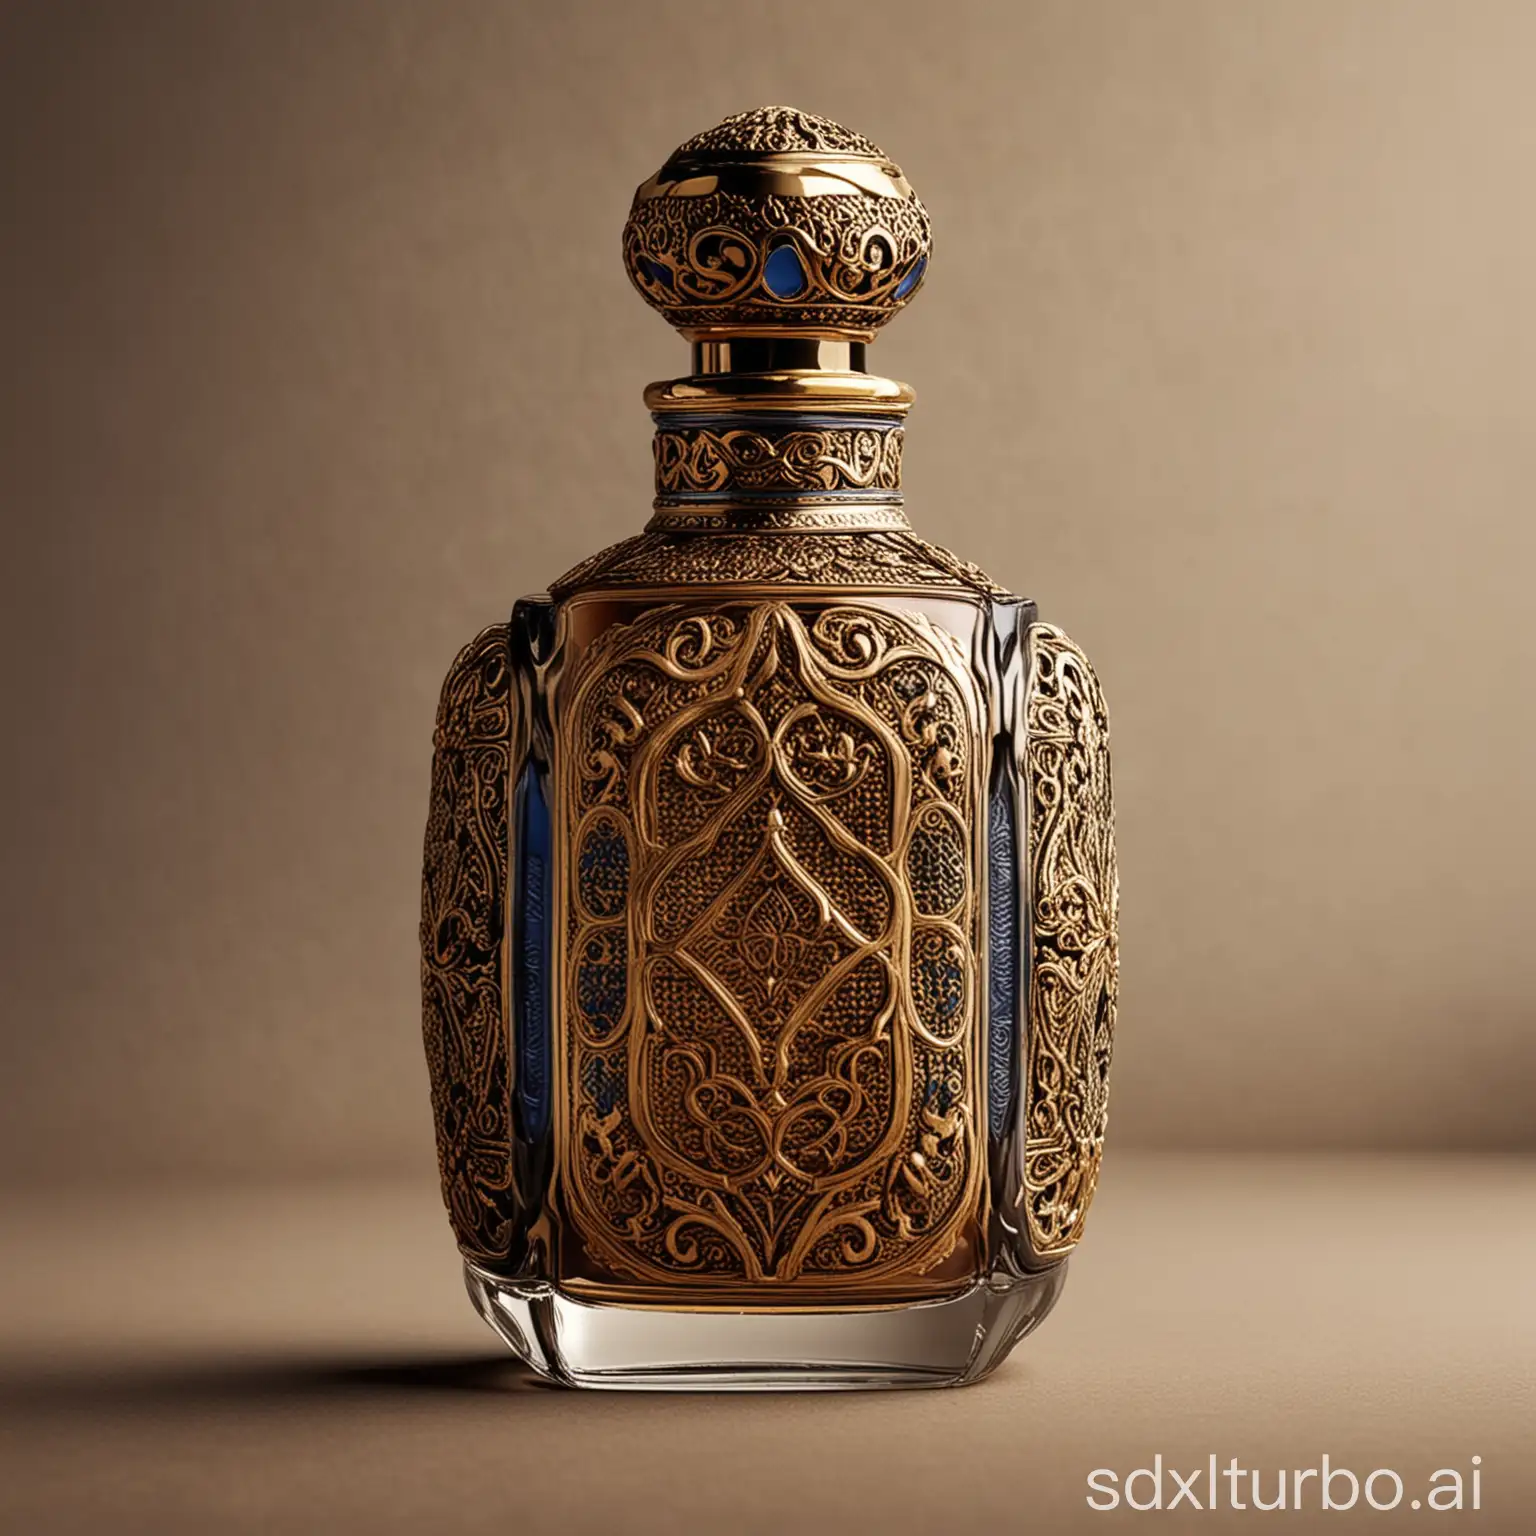 Middle Eastern men's perfume bottle